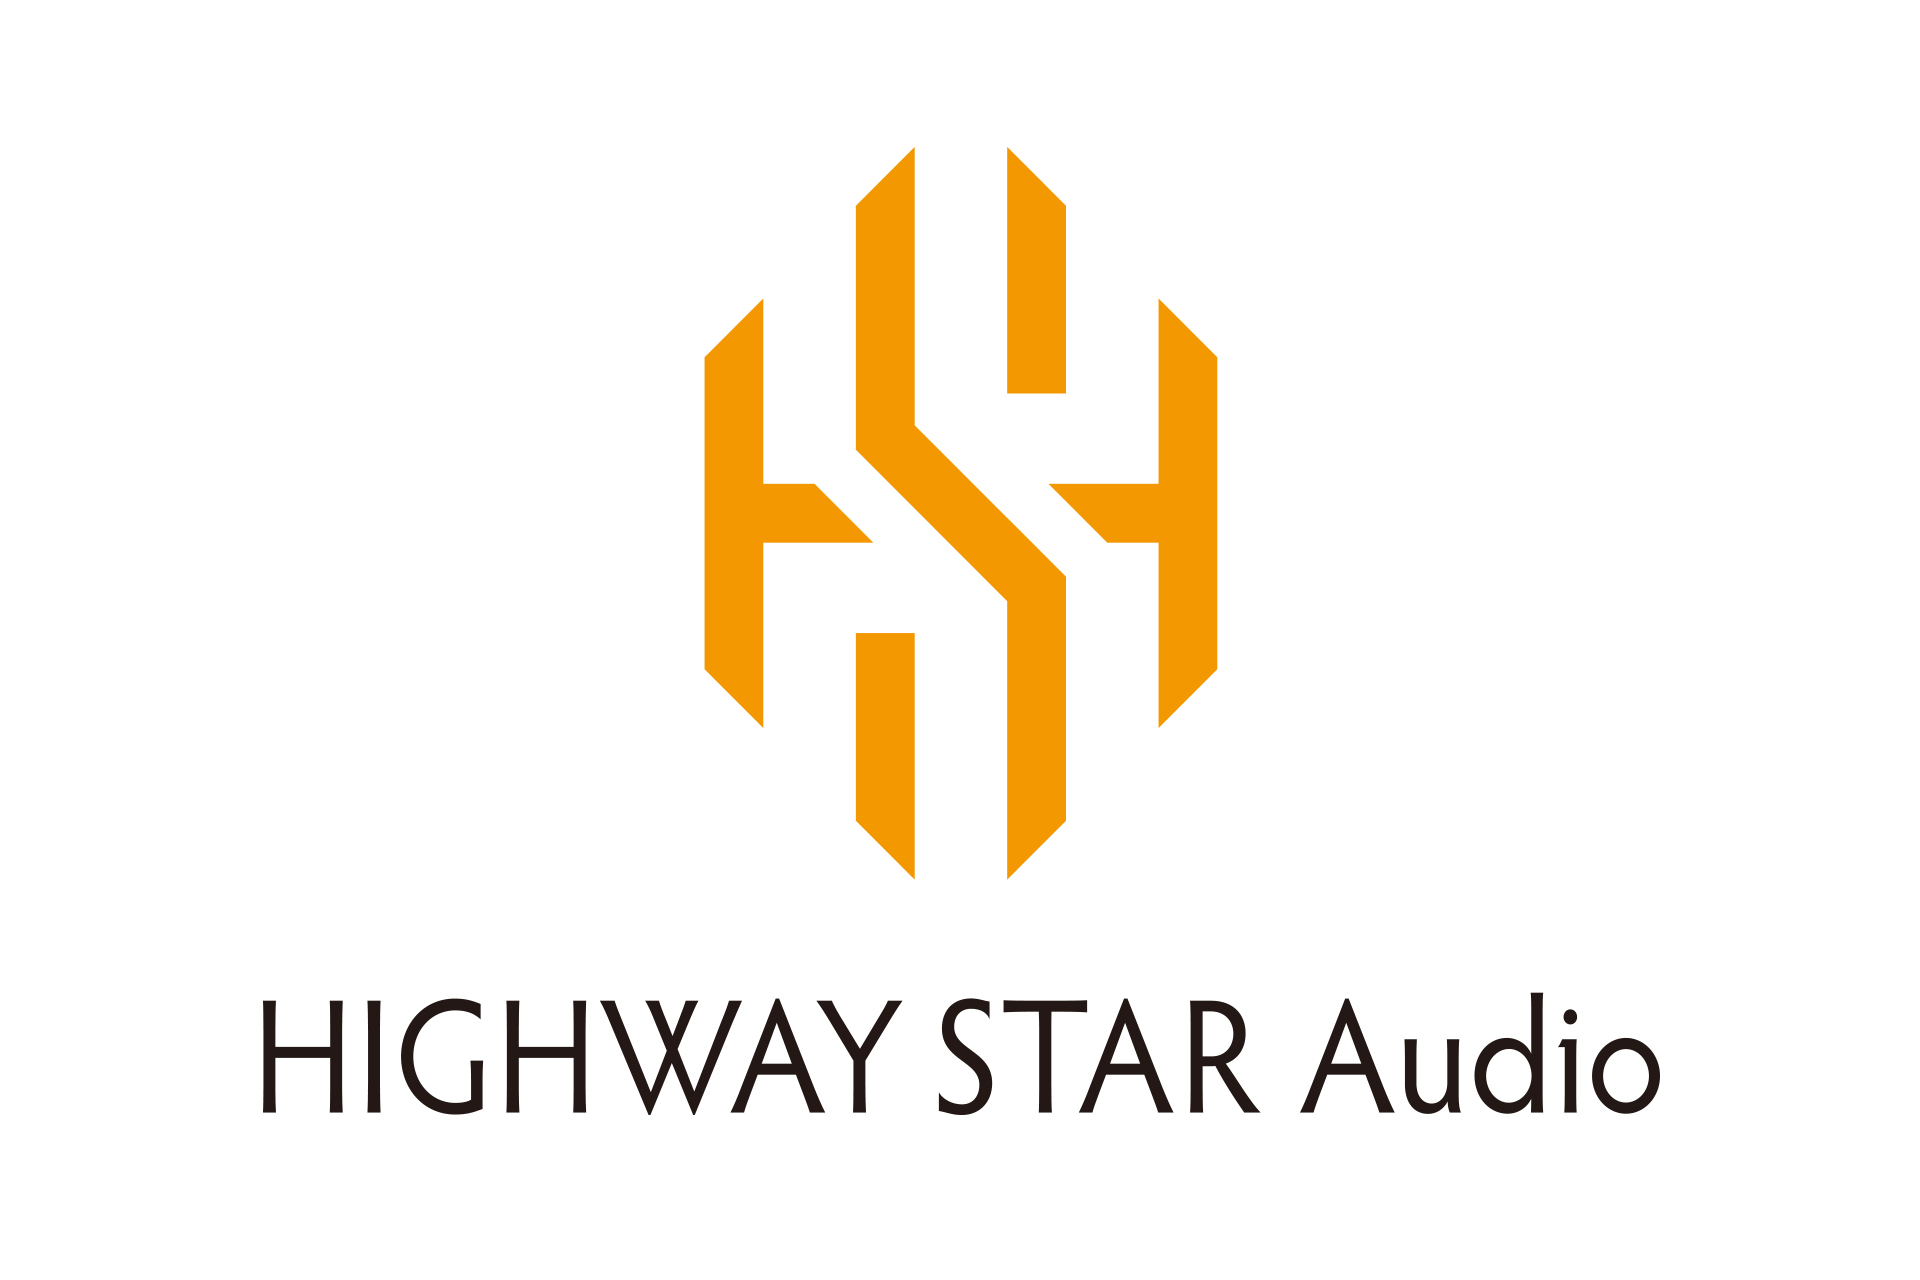 HIGHWAY STAR Audio